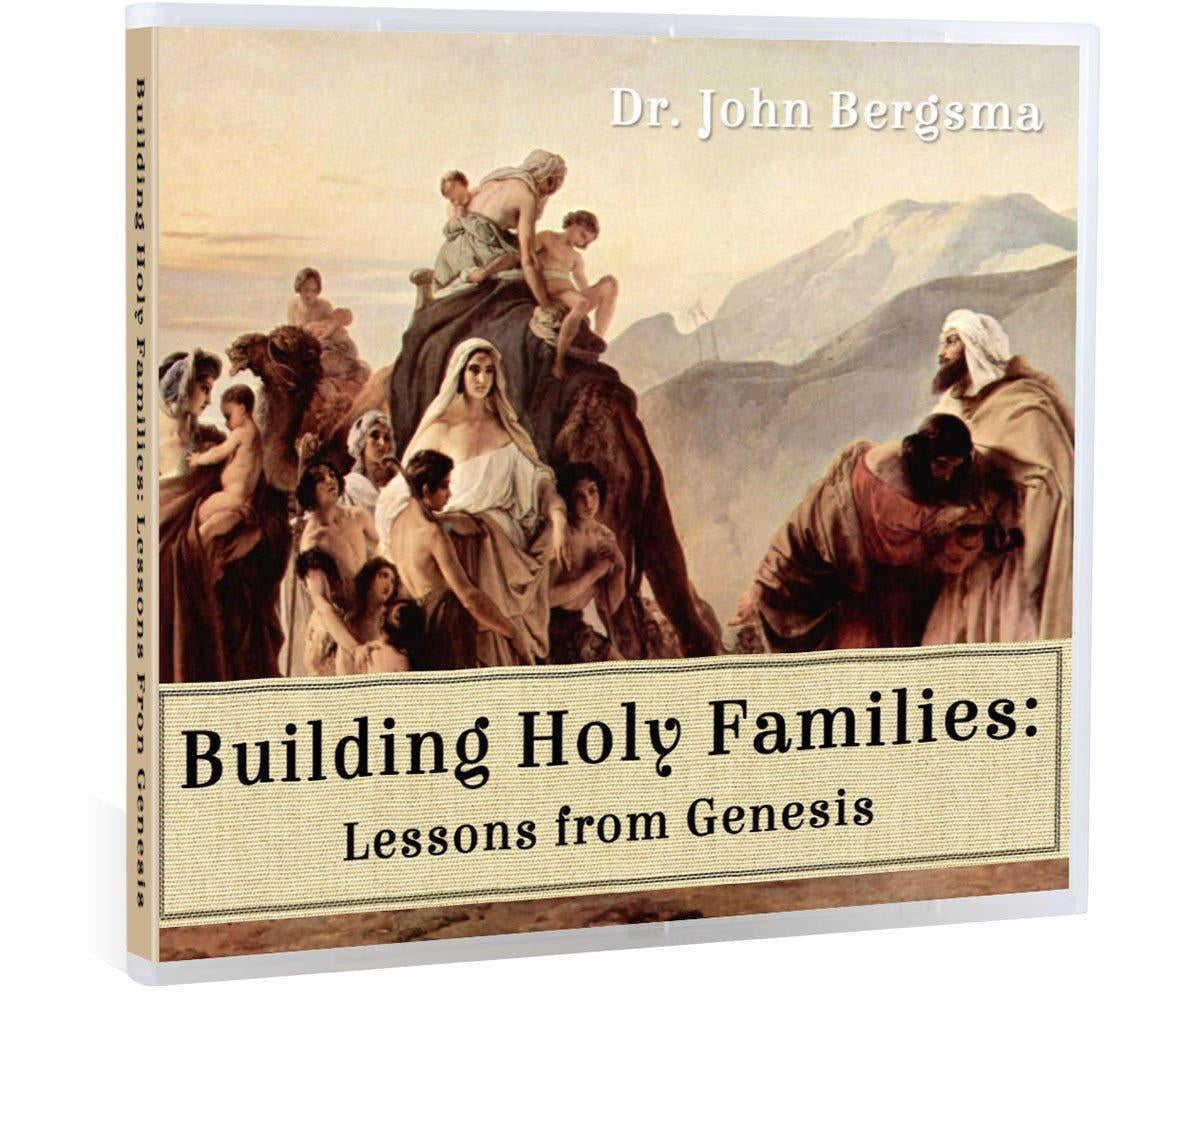 Genesis and family life with Dr. John Bergsma CD